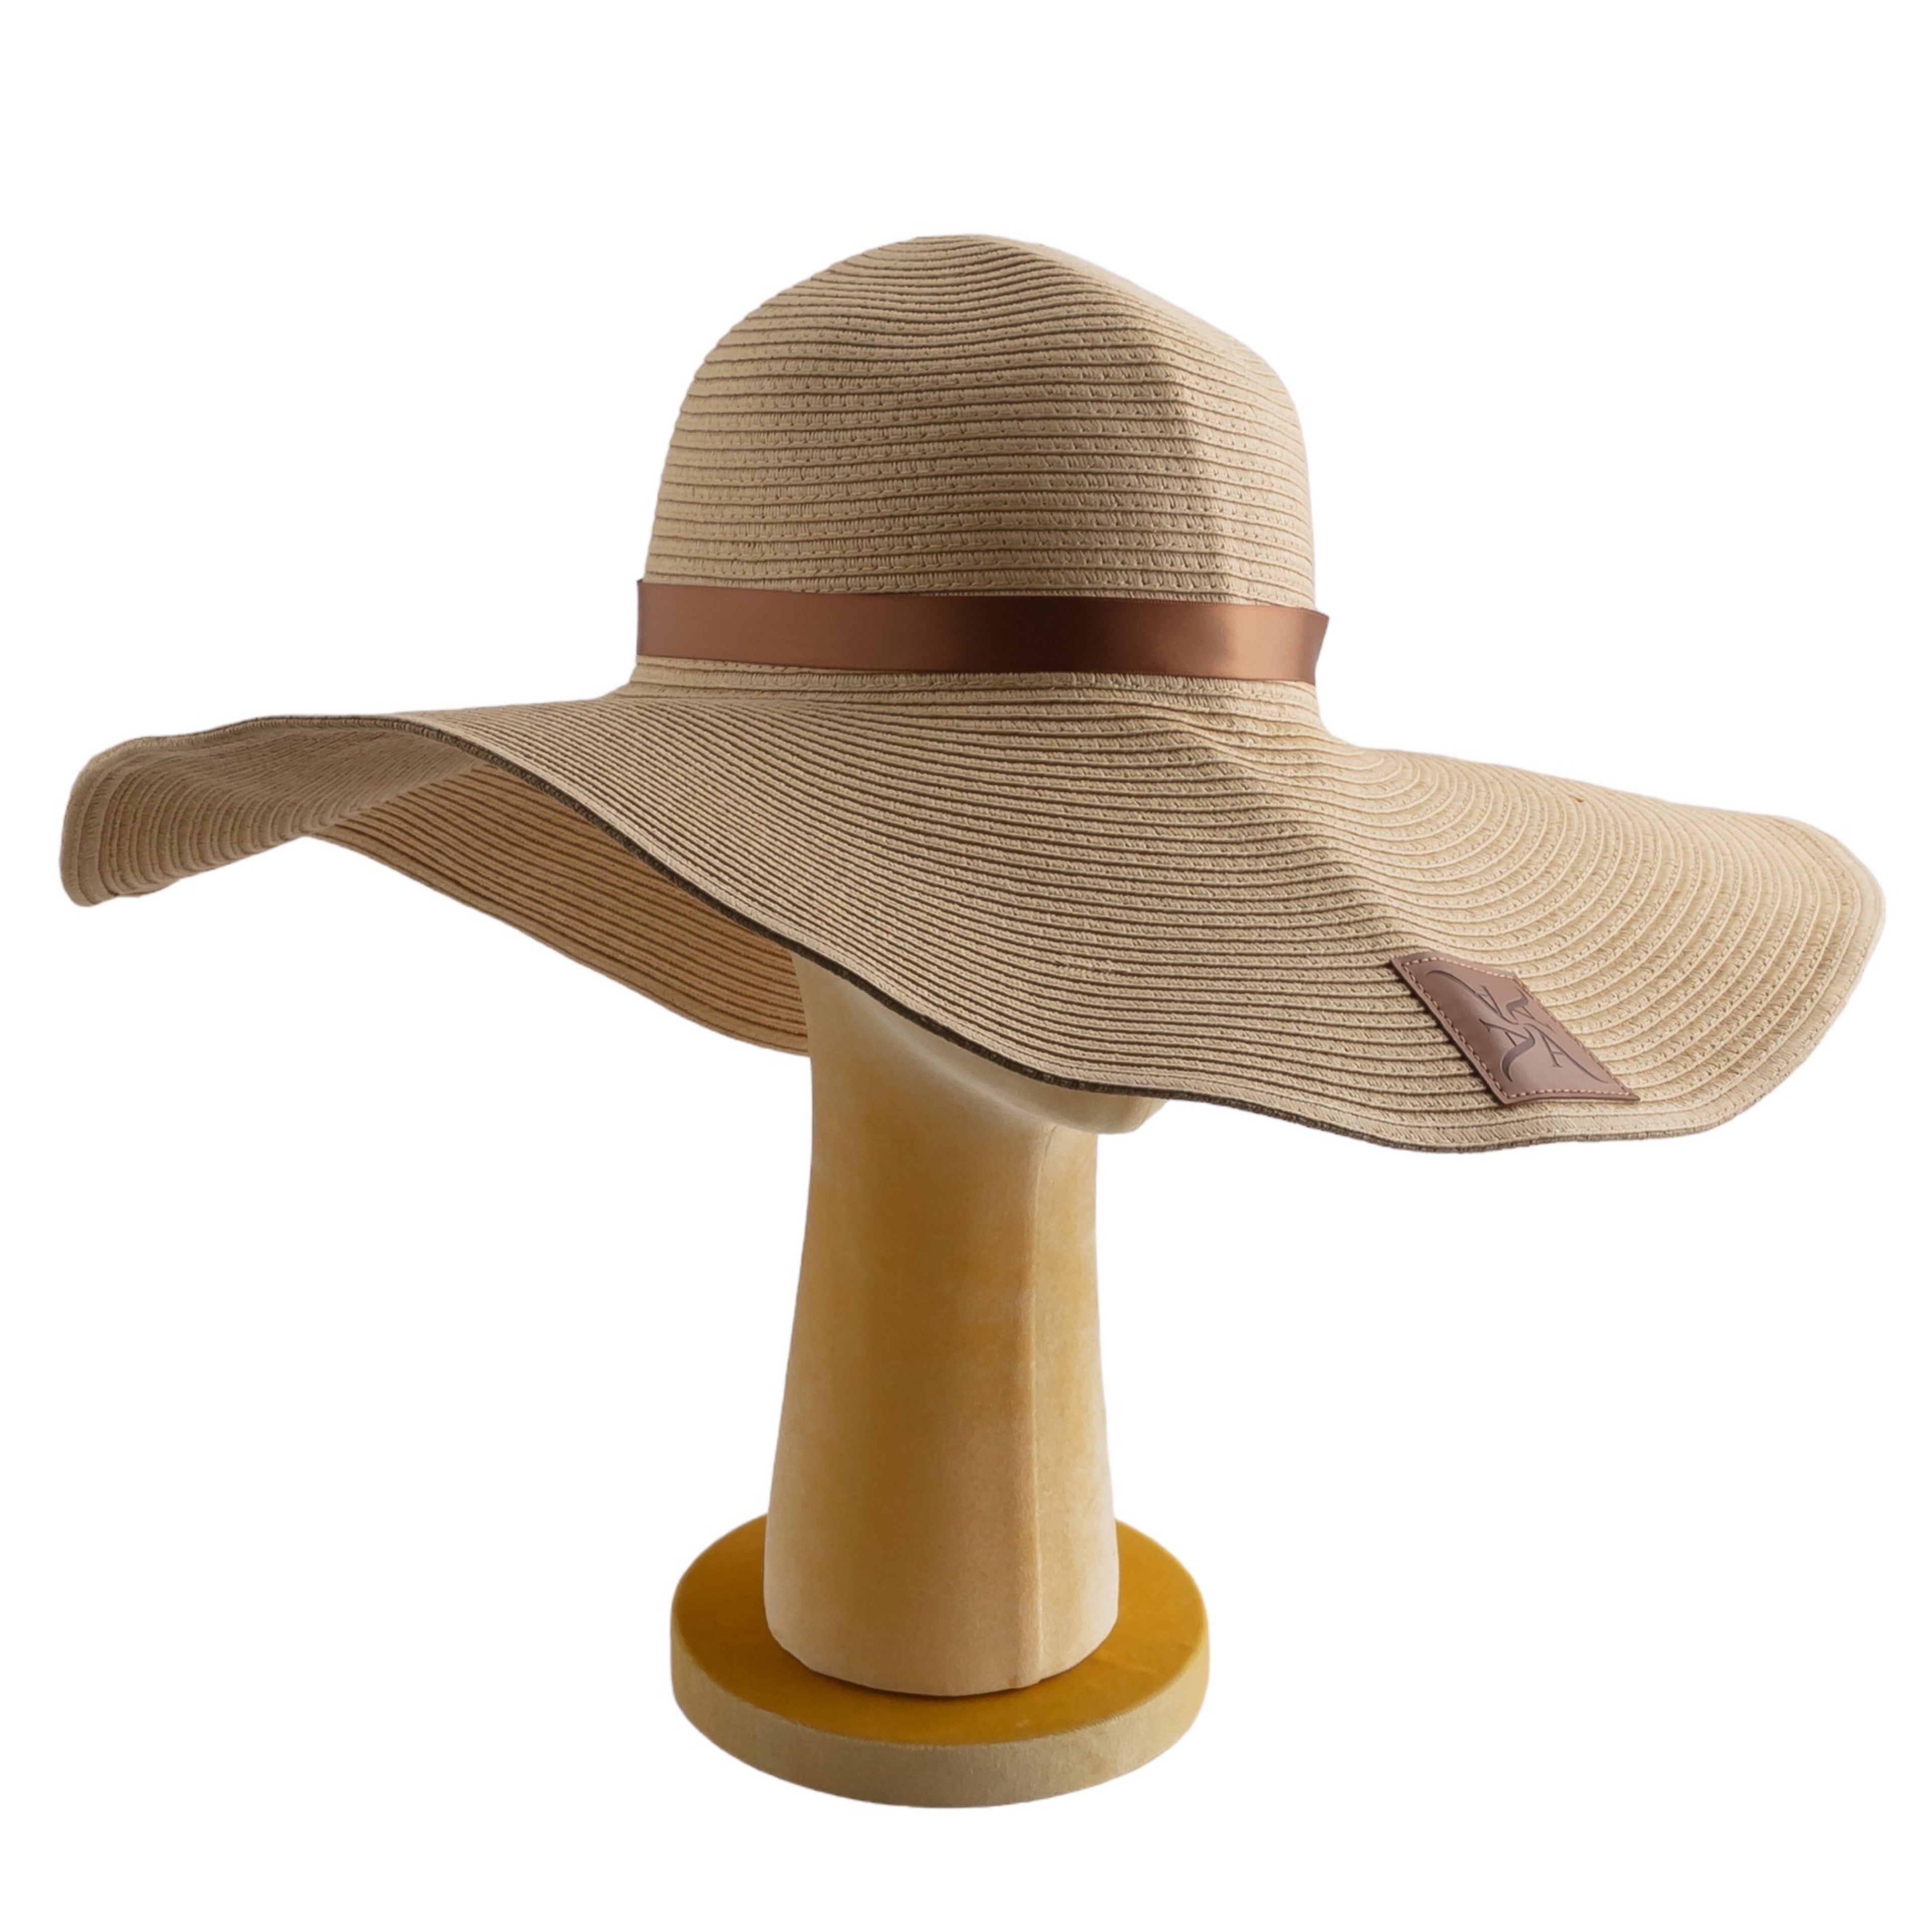 Addoony Straw Wide Rim Hat أدوني: قبعة قش صيفية